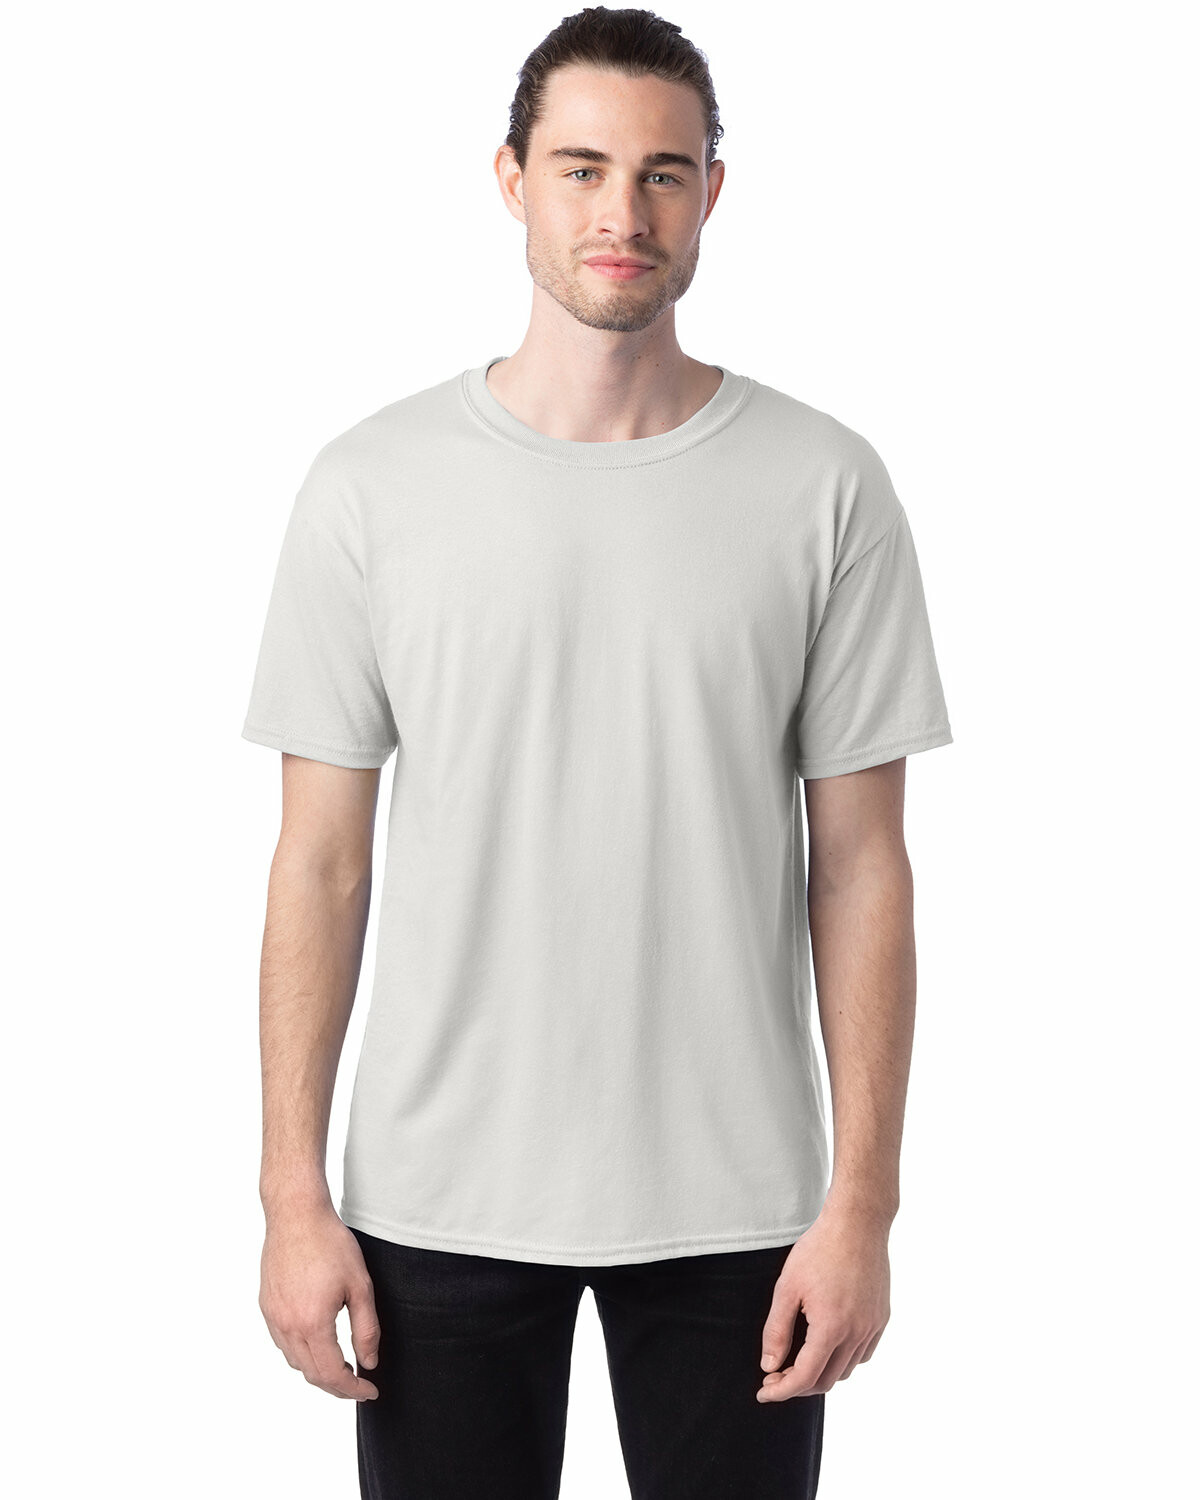 Hanes 5170 Mens 50/50 ComfortBlend EcoSmart T-Shirt